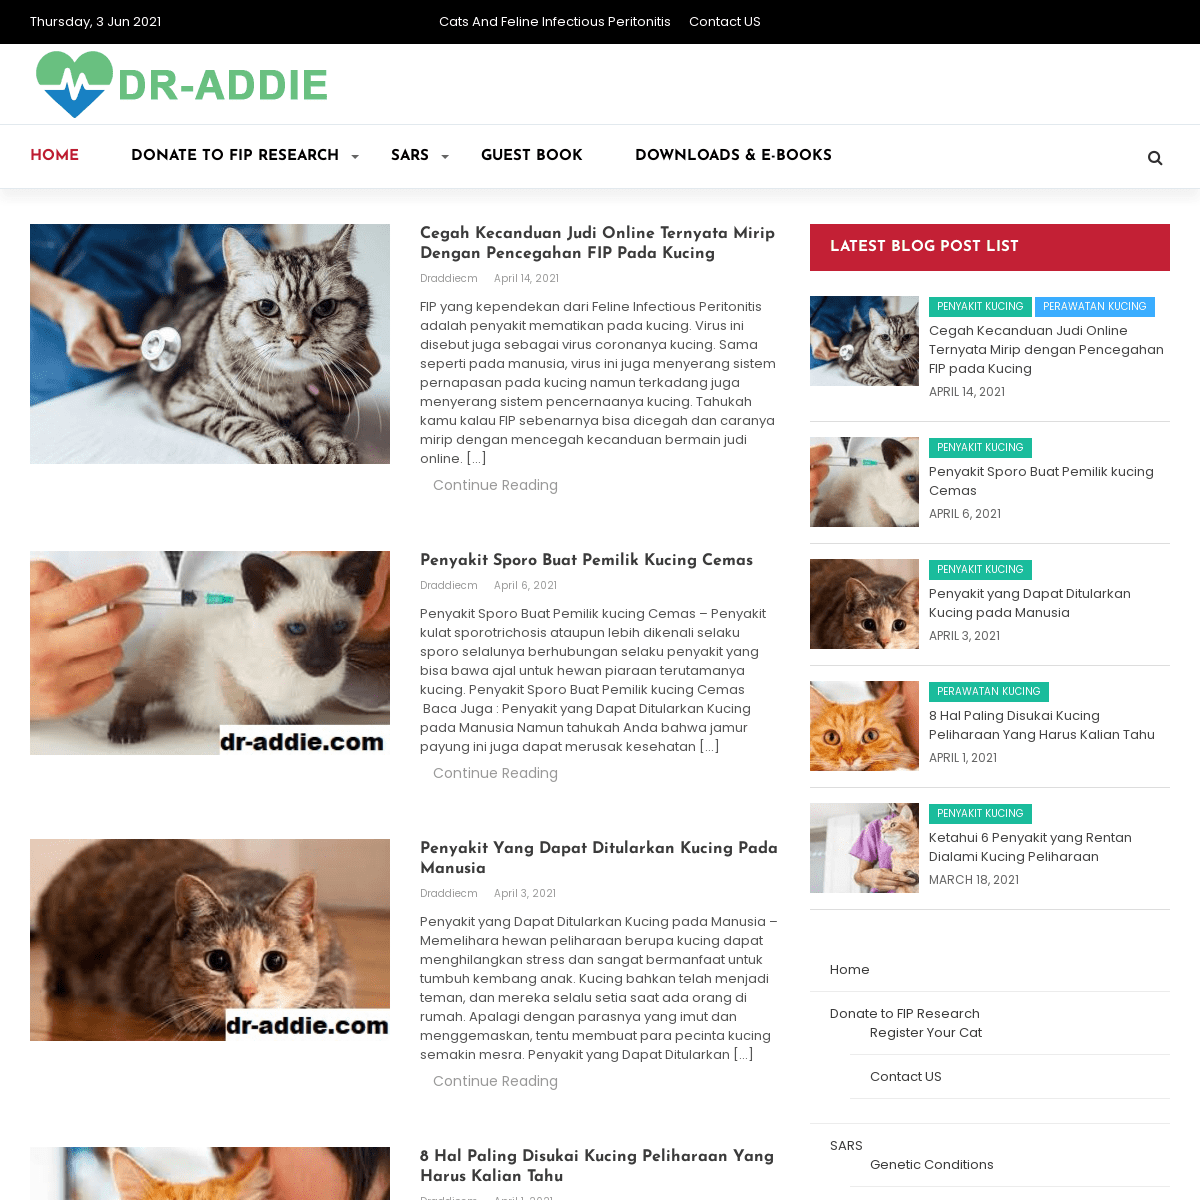 A complete backup of https://dr-addie.com